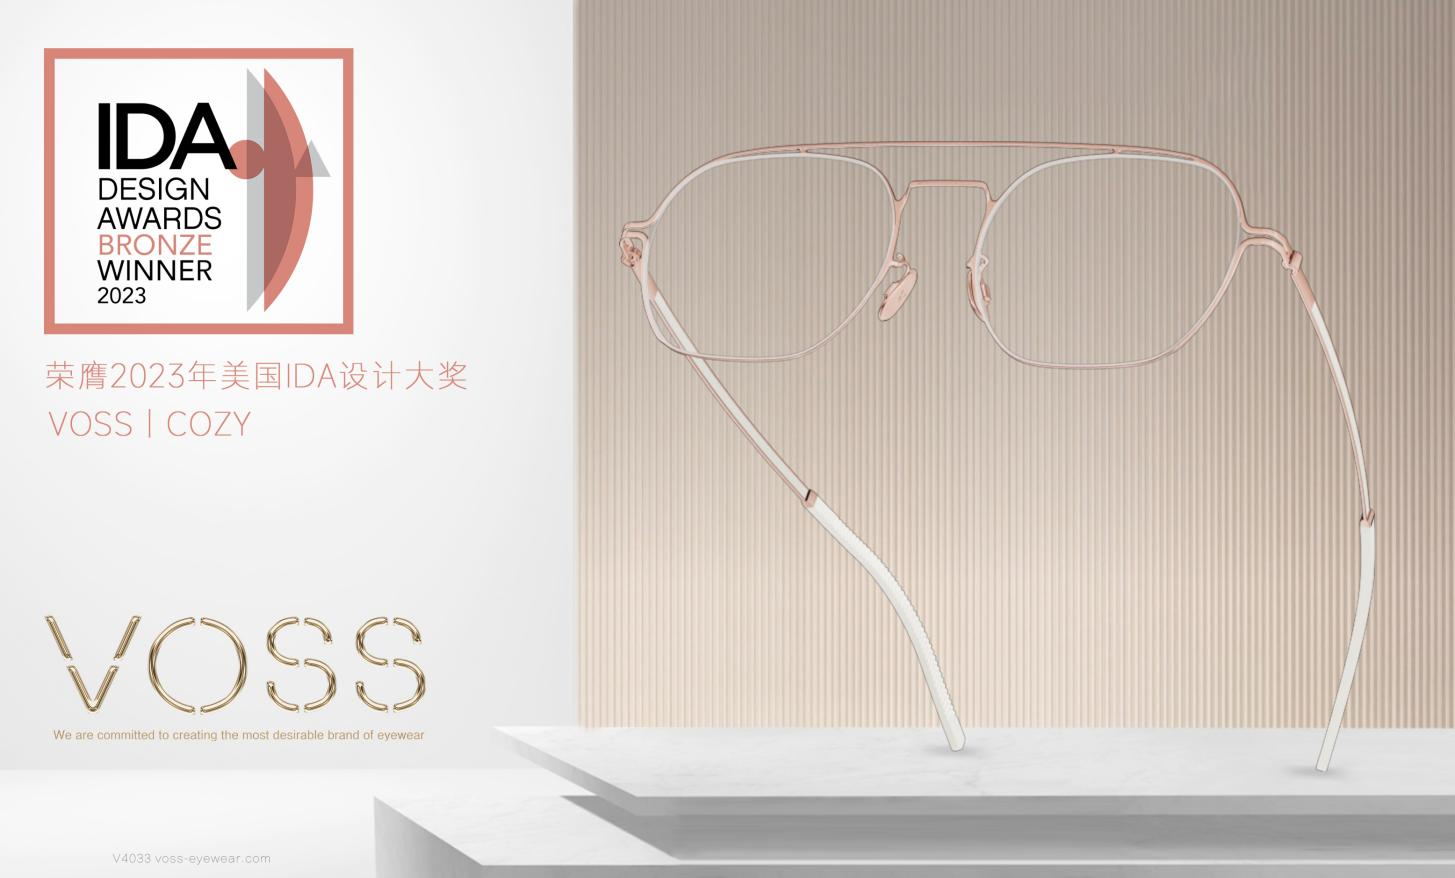 VOSS Eyewear Wins Prestigious U.S. IDA Design Award